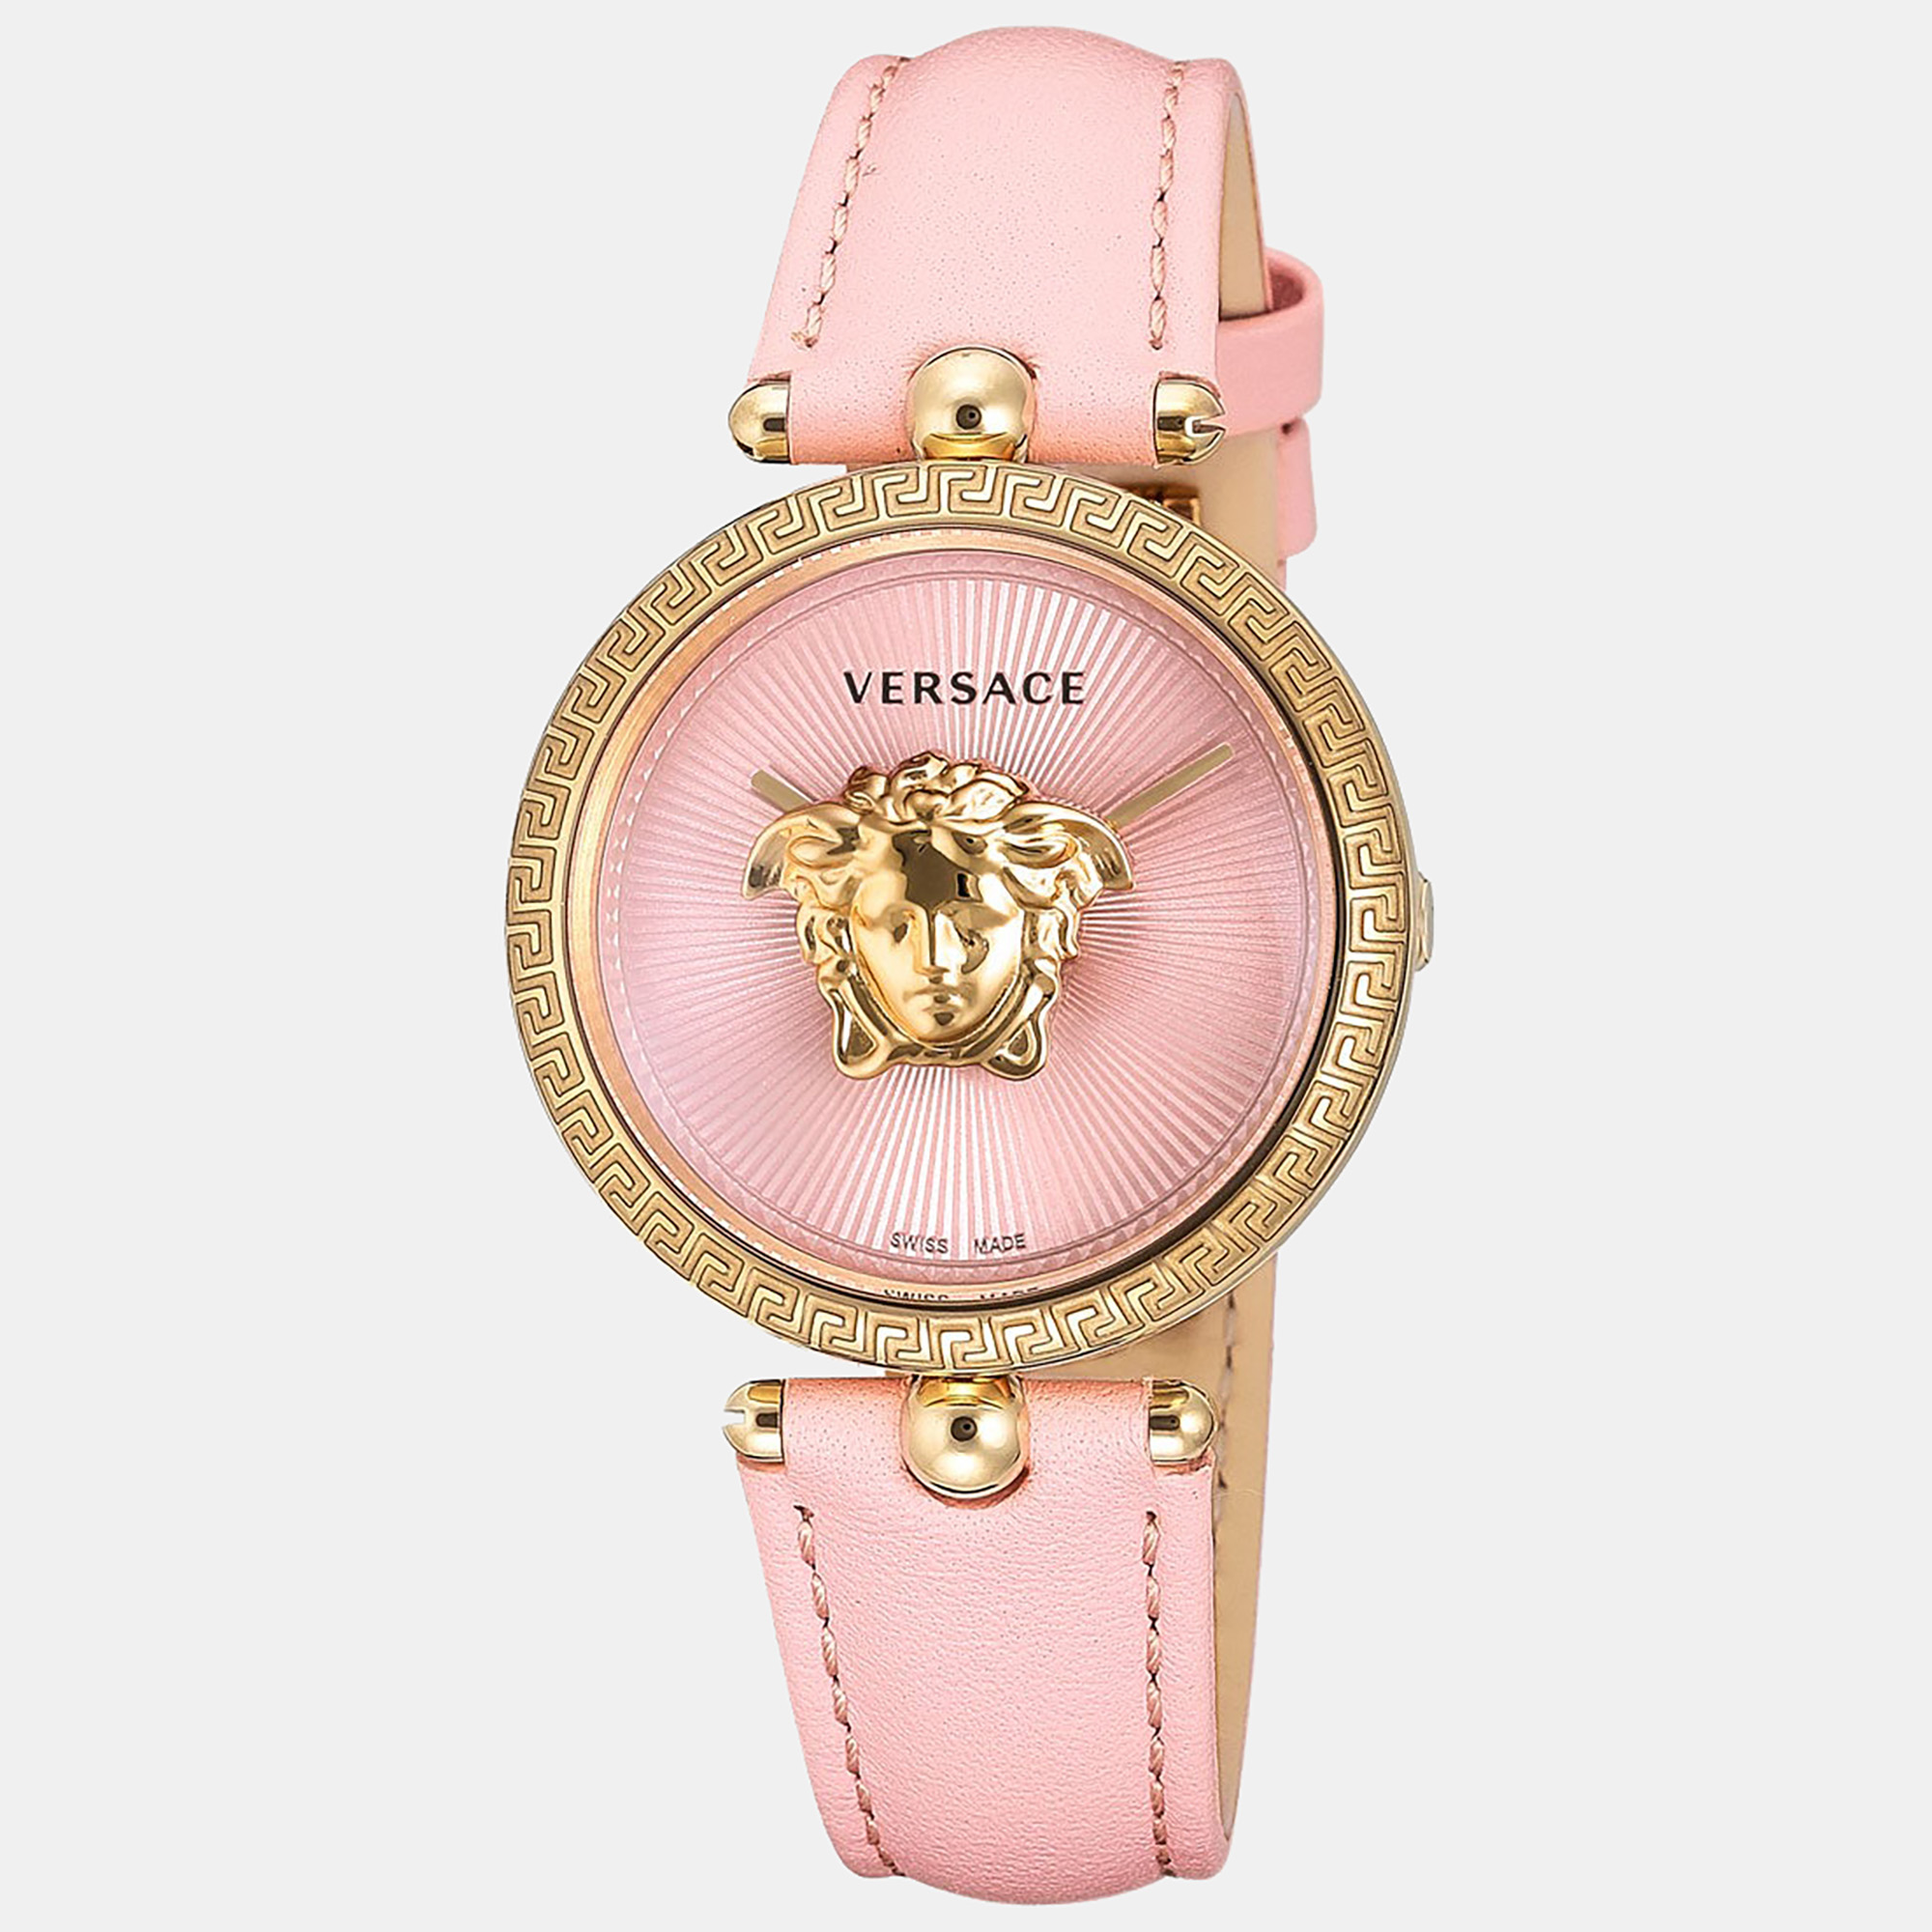 Versace women's palazzo empire 34mm quartz watch vecq00518